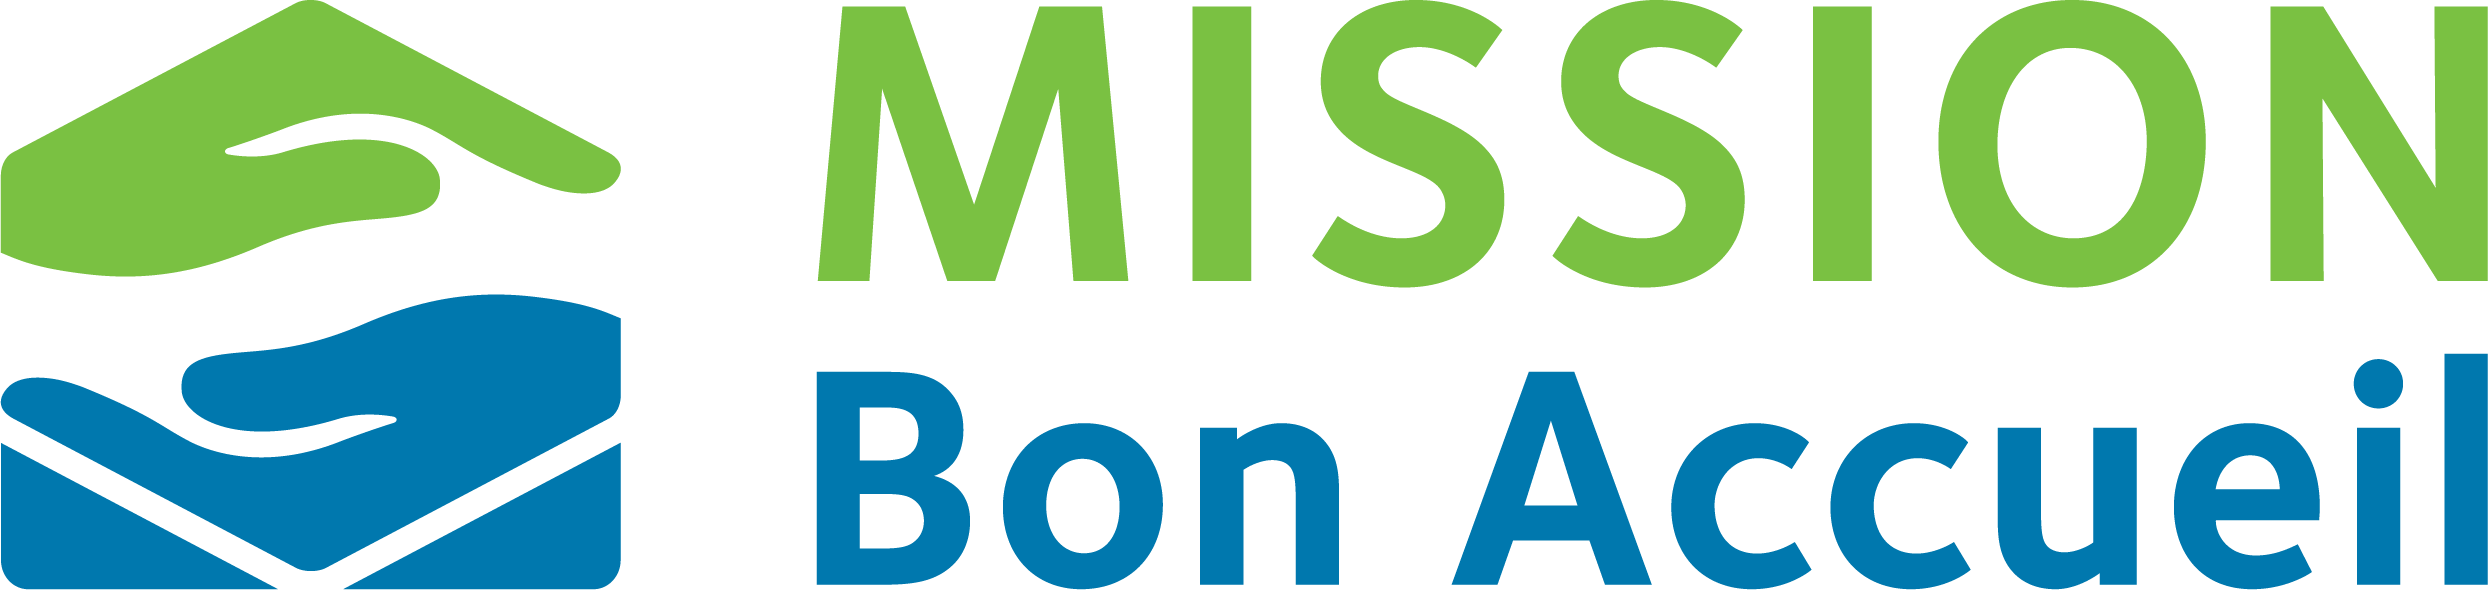 Logo Mission Bon Accueil